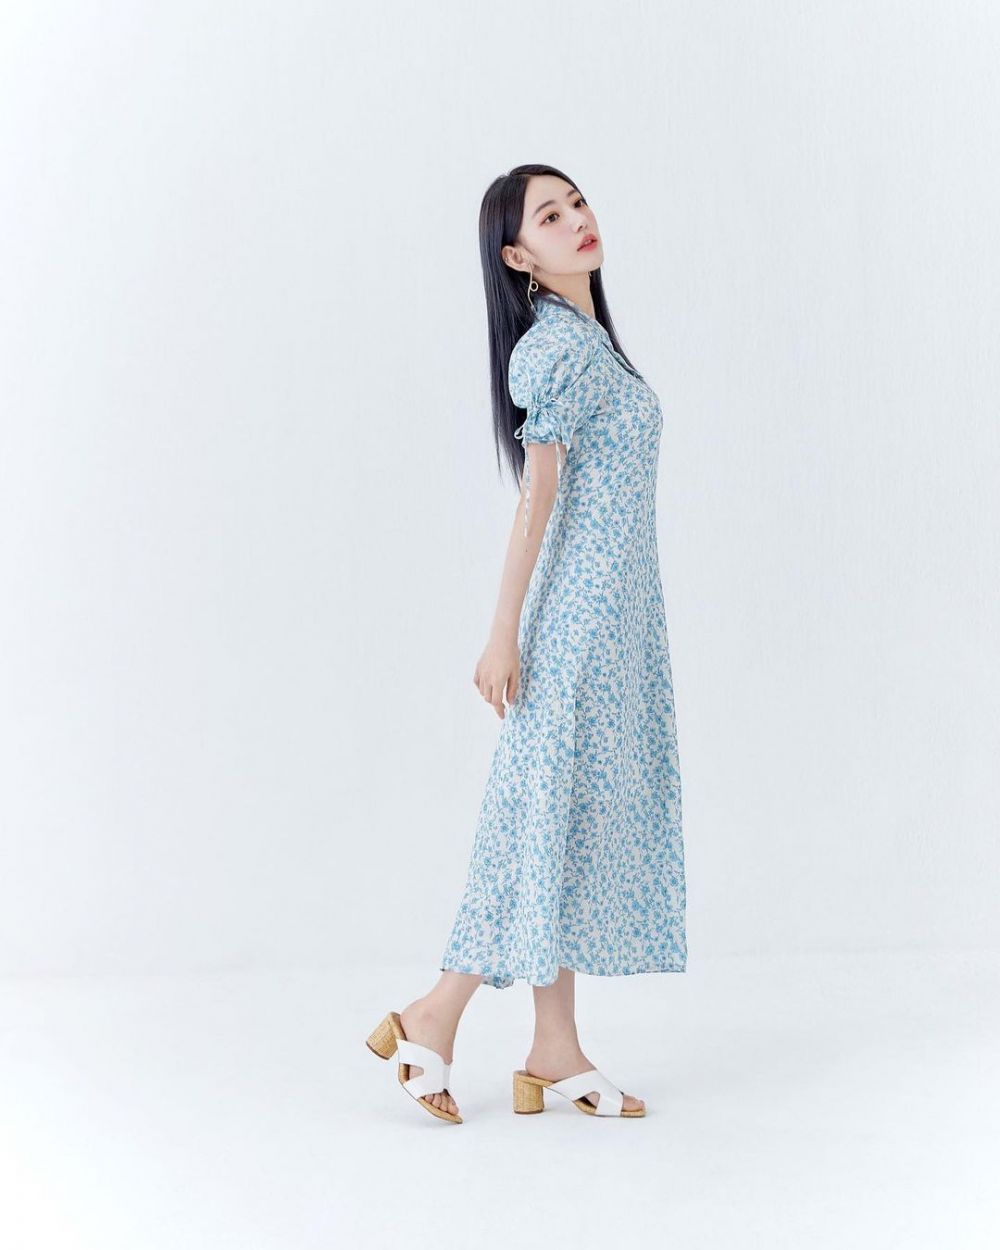 10 Ide Outfit ala Sakura Le Sserafim yang Simpel tapi Stylish Abis